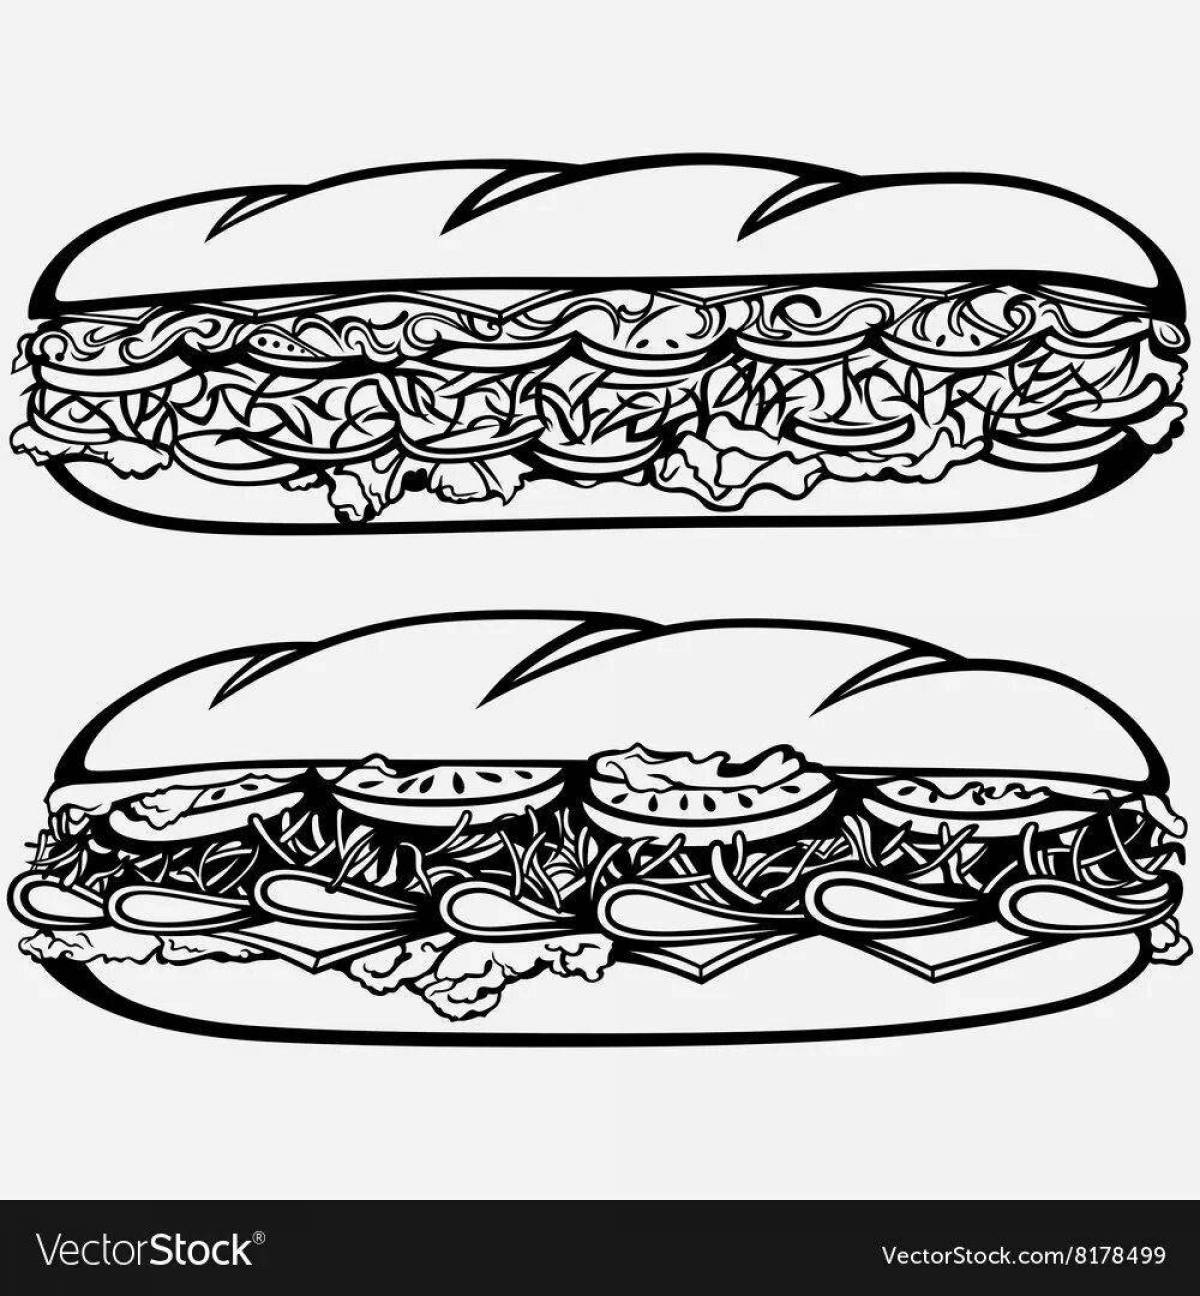 Nutritious sausage sandwich coloring page